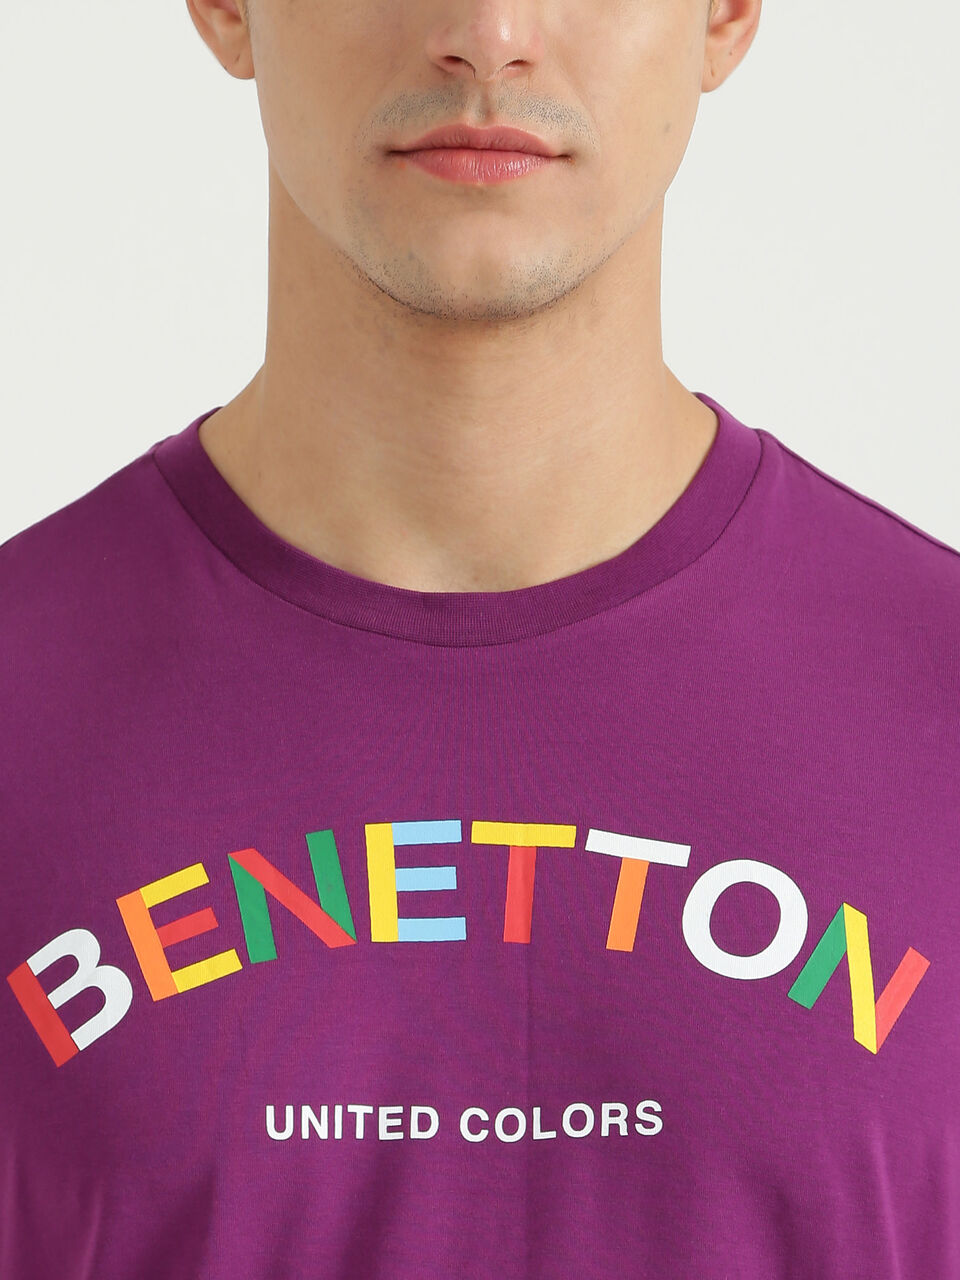 Mens Short Sleeve Printed Benetton Purple T-Shirt - 